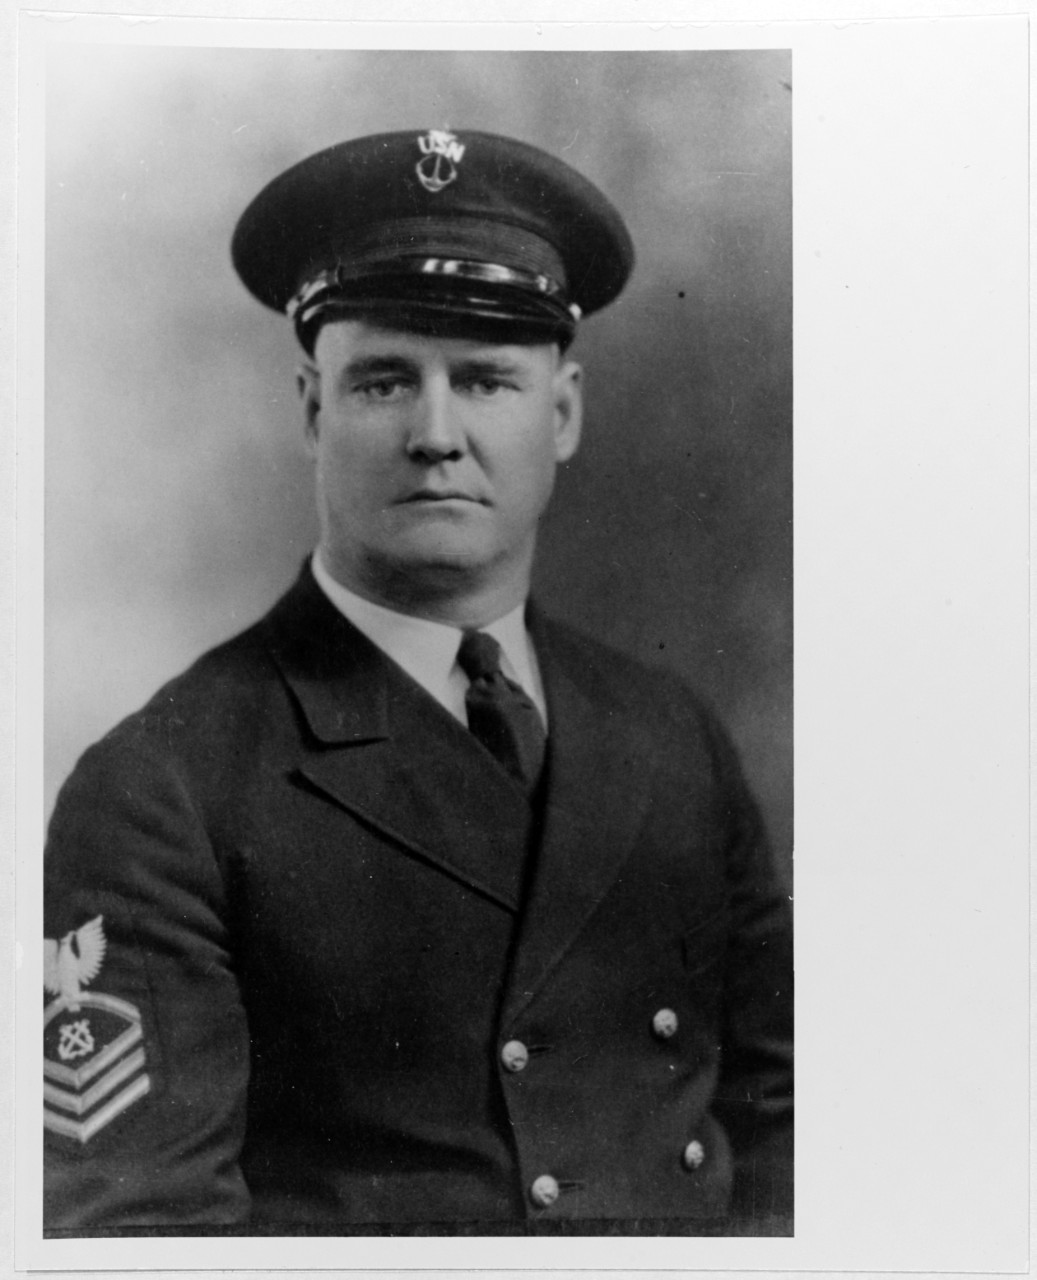 Joseph L. Crouch, Chief Boatswain's Mate, USN